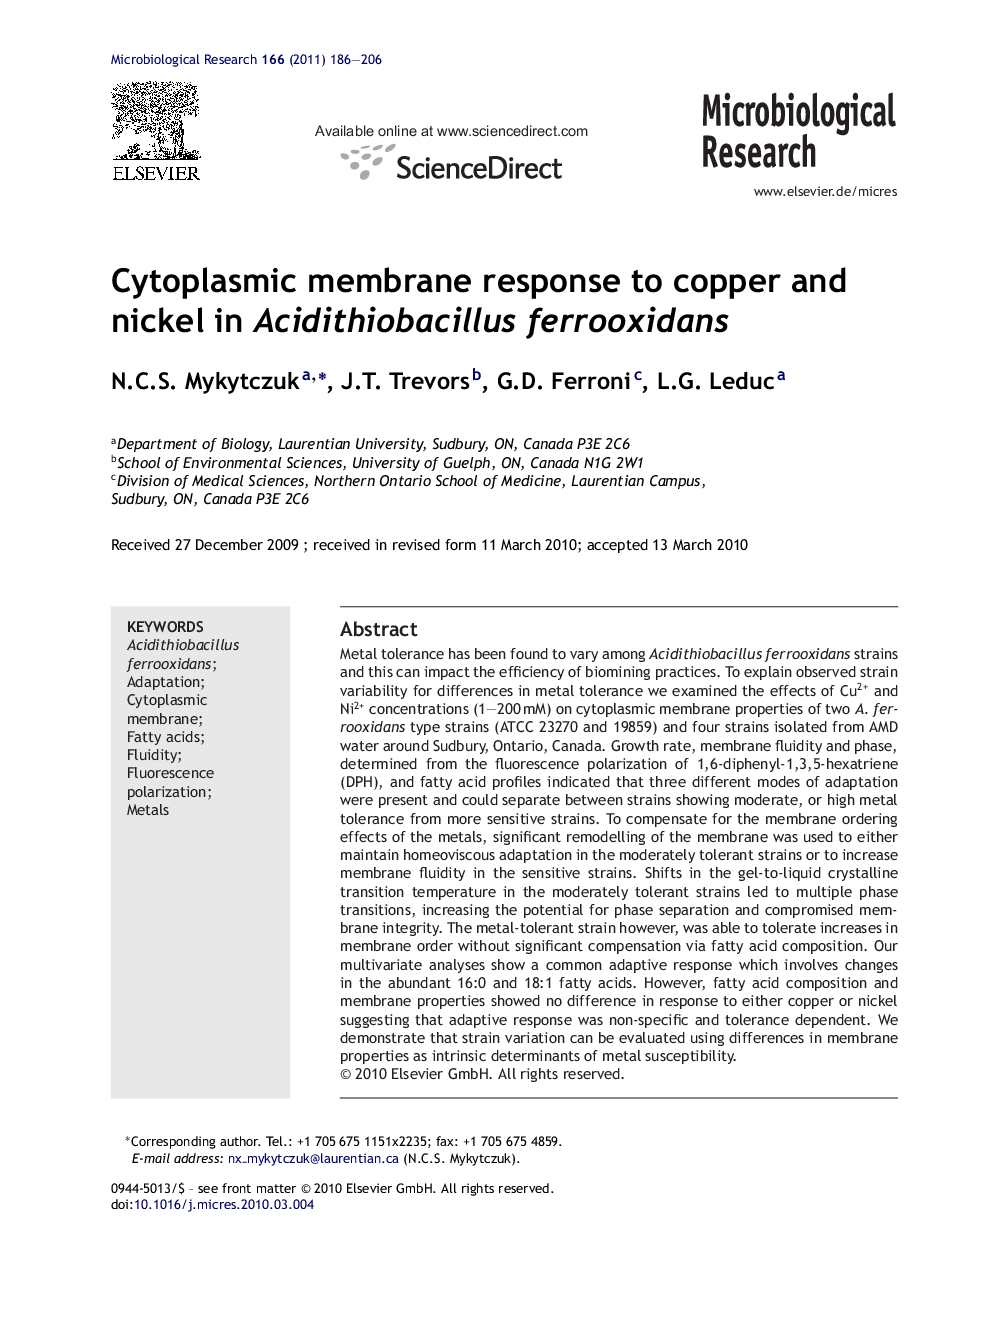 Cytoplasmic membrane response to copper and nickel in Acidithiobacillus ferrooxidans